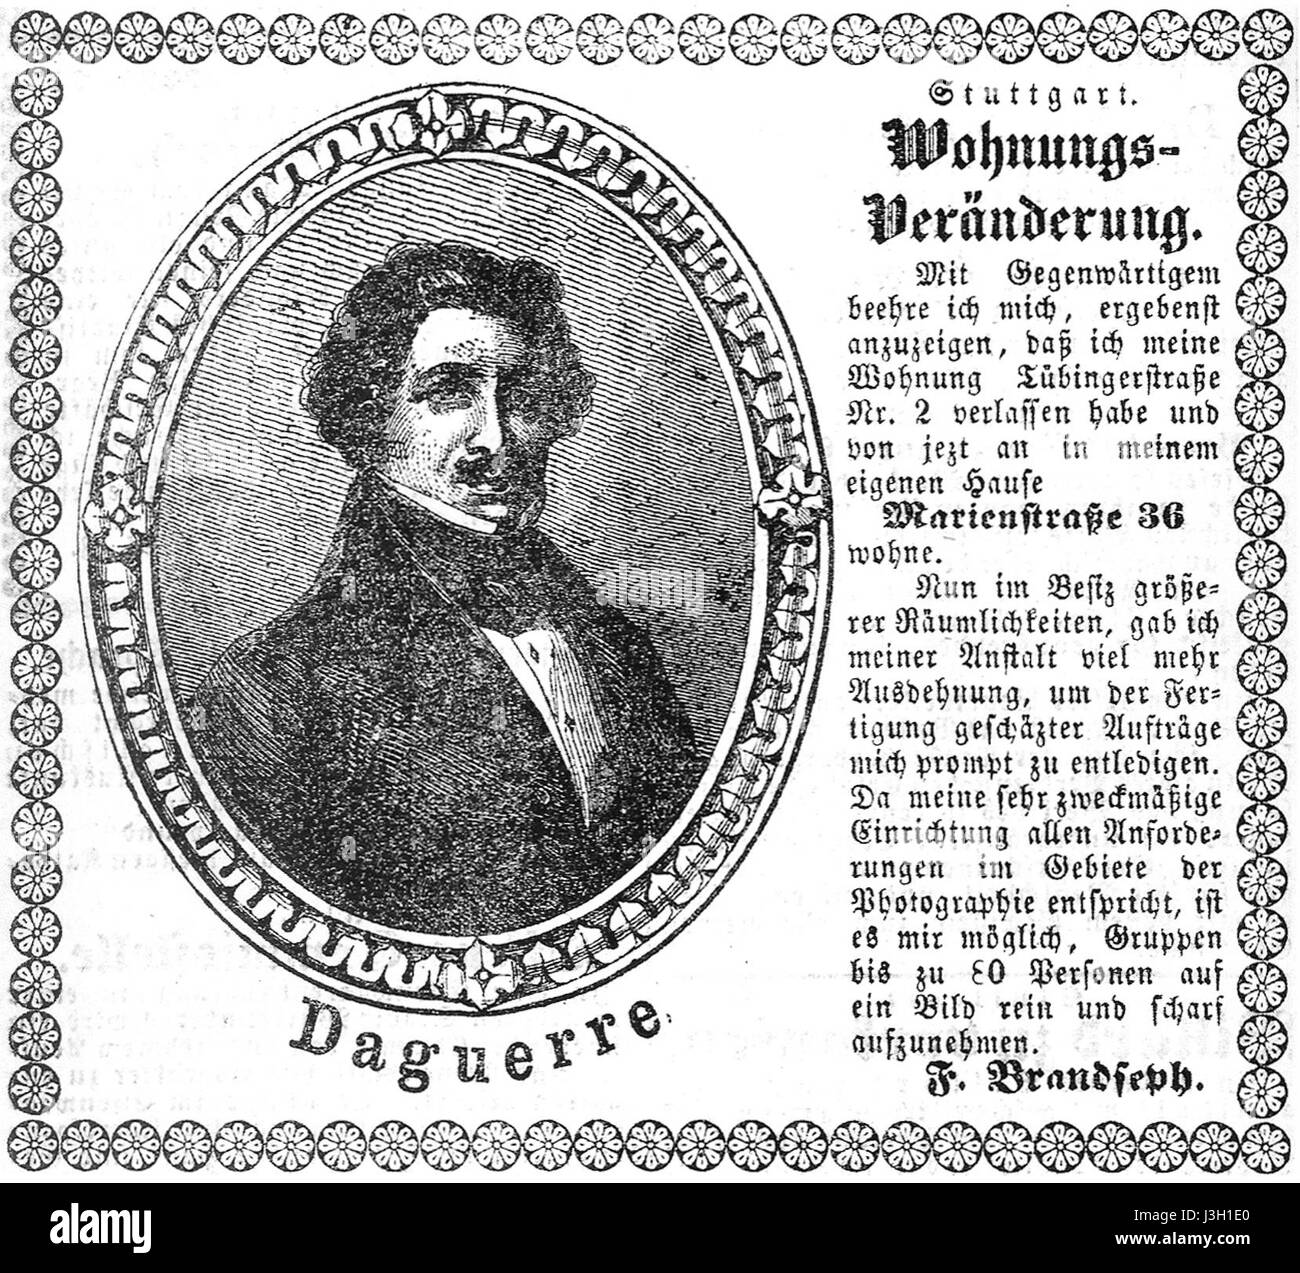 FBrandseph Anzeige 1860 (132) Stock Photo